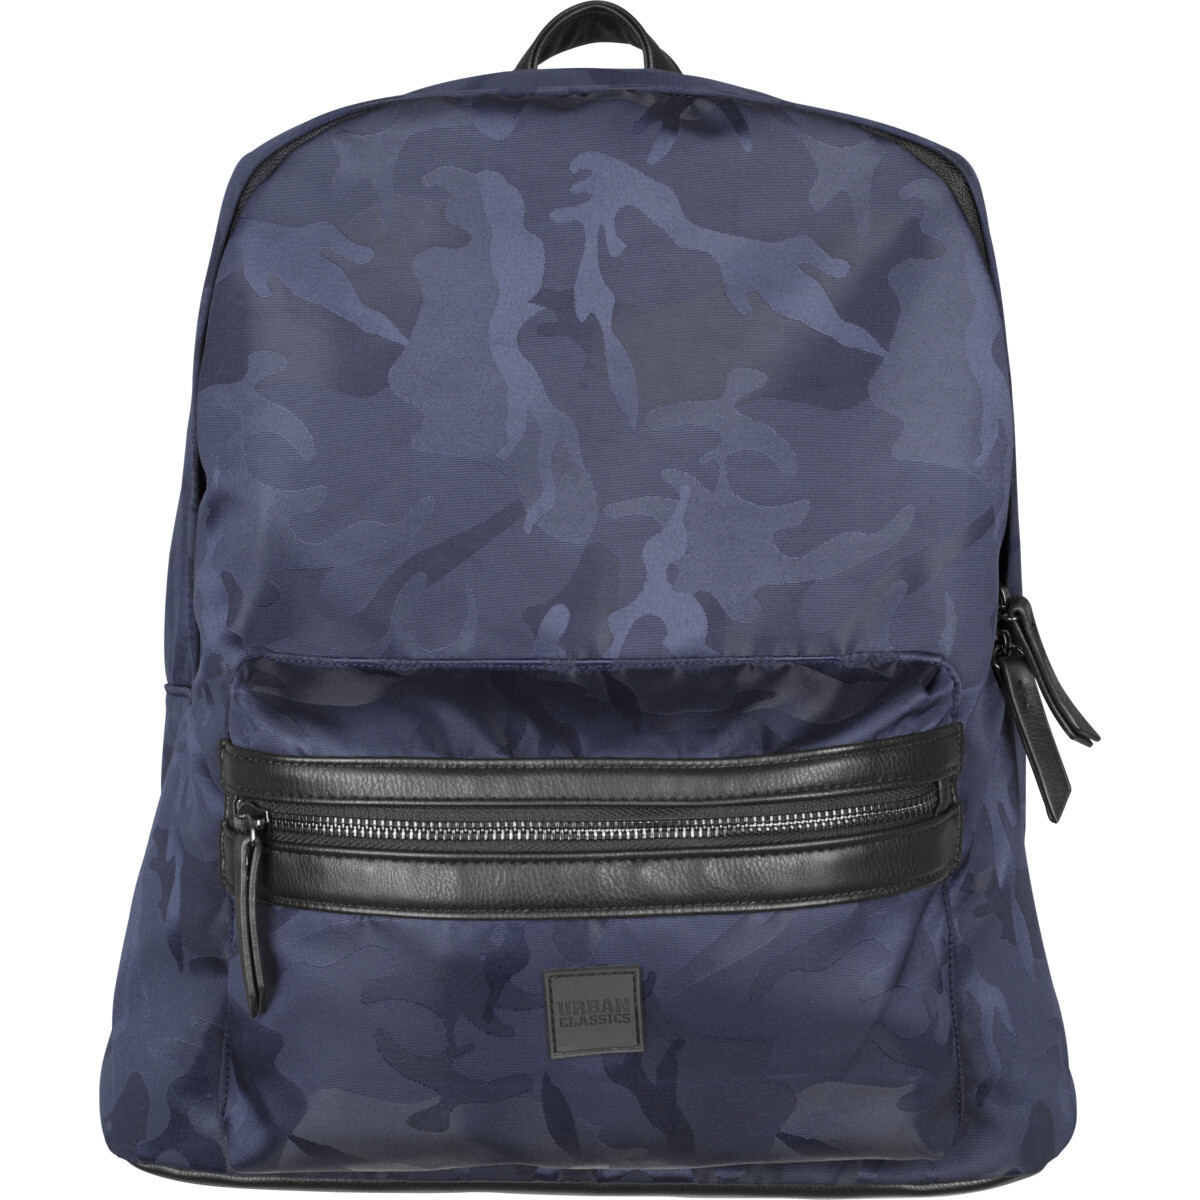 Camo Jacquard Backpack - Navy Camo